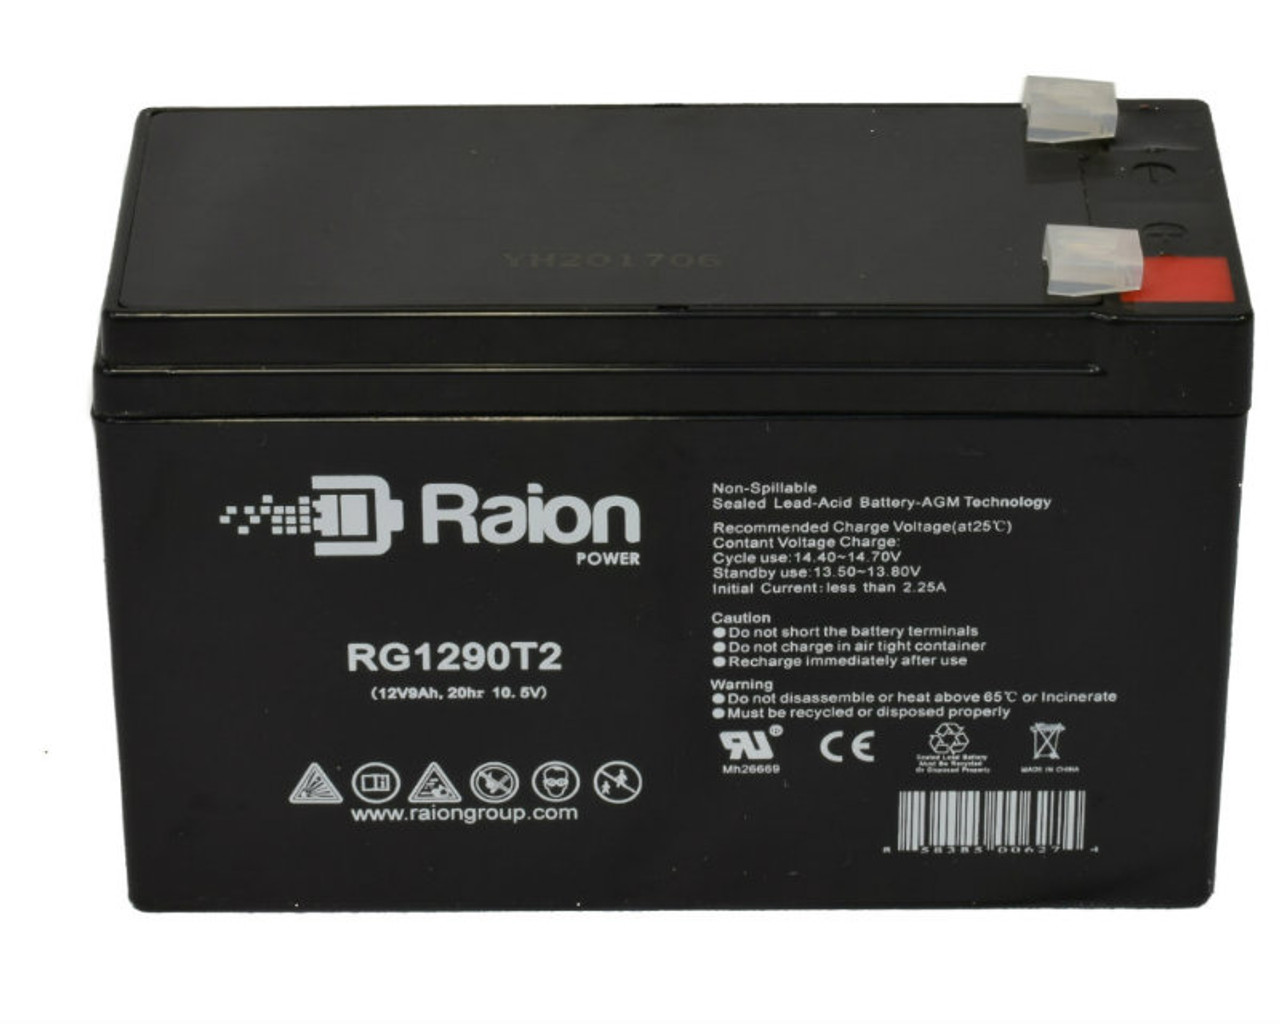 Raion Power RG1290T2 12V 9Ah Lead Acid Battery for RS Pro 174-8858